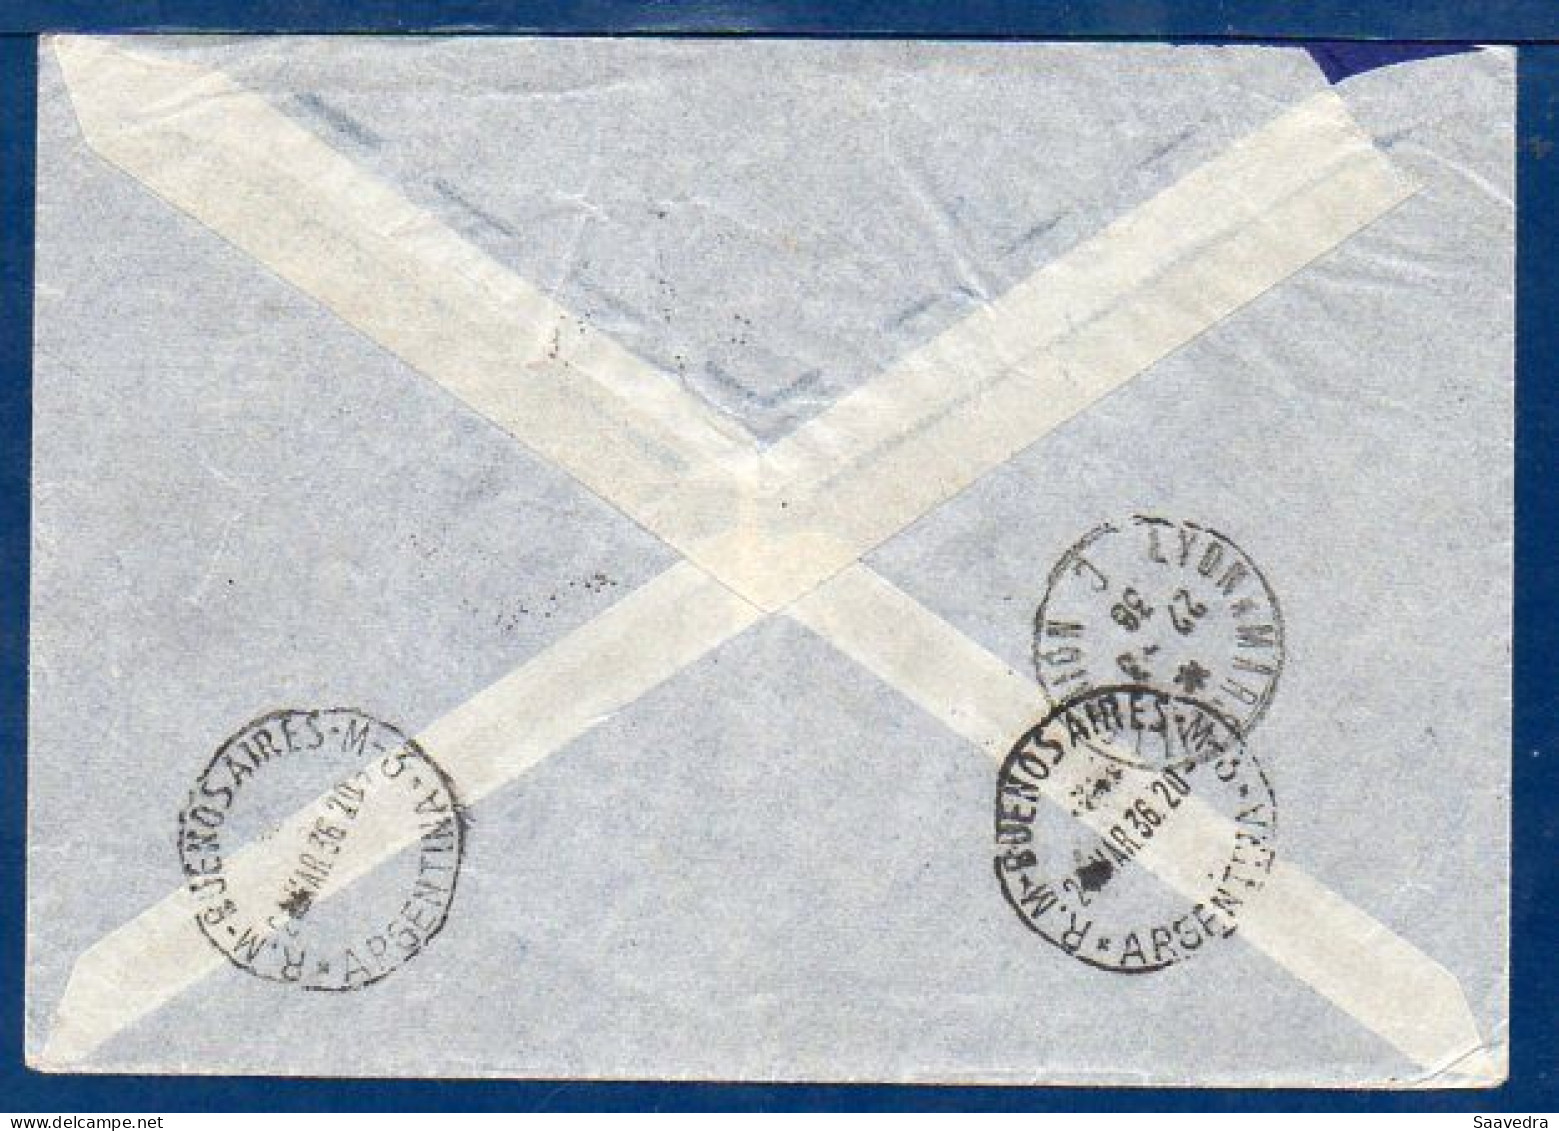 Switzerland To Argentina, 1936, Via Air France  (008) - Briefe U. Dokumente